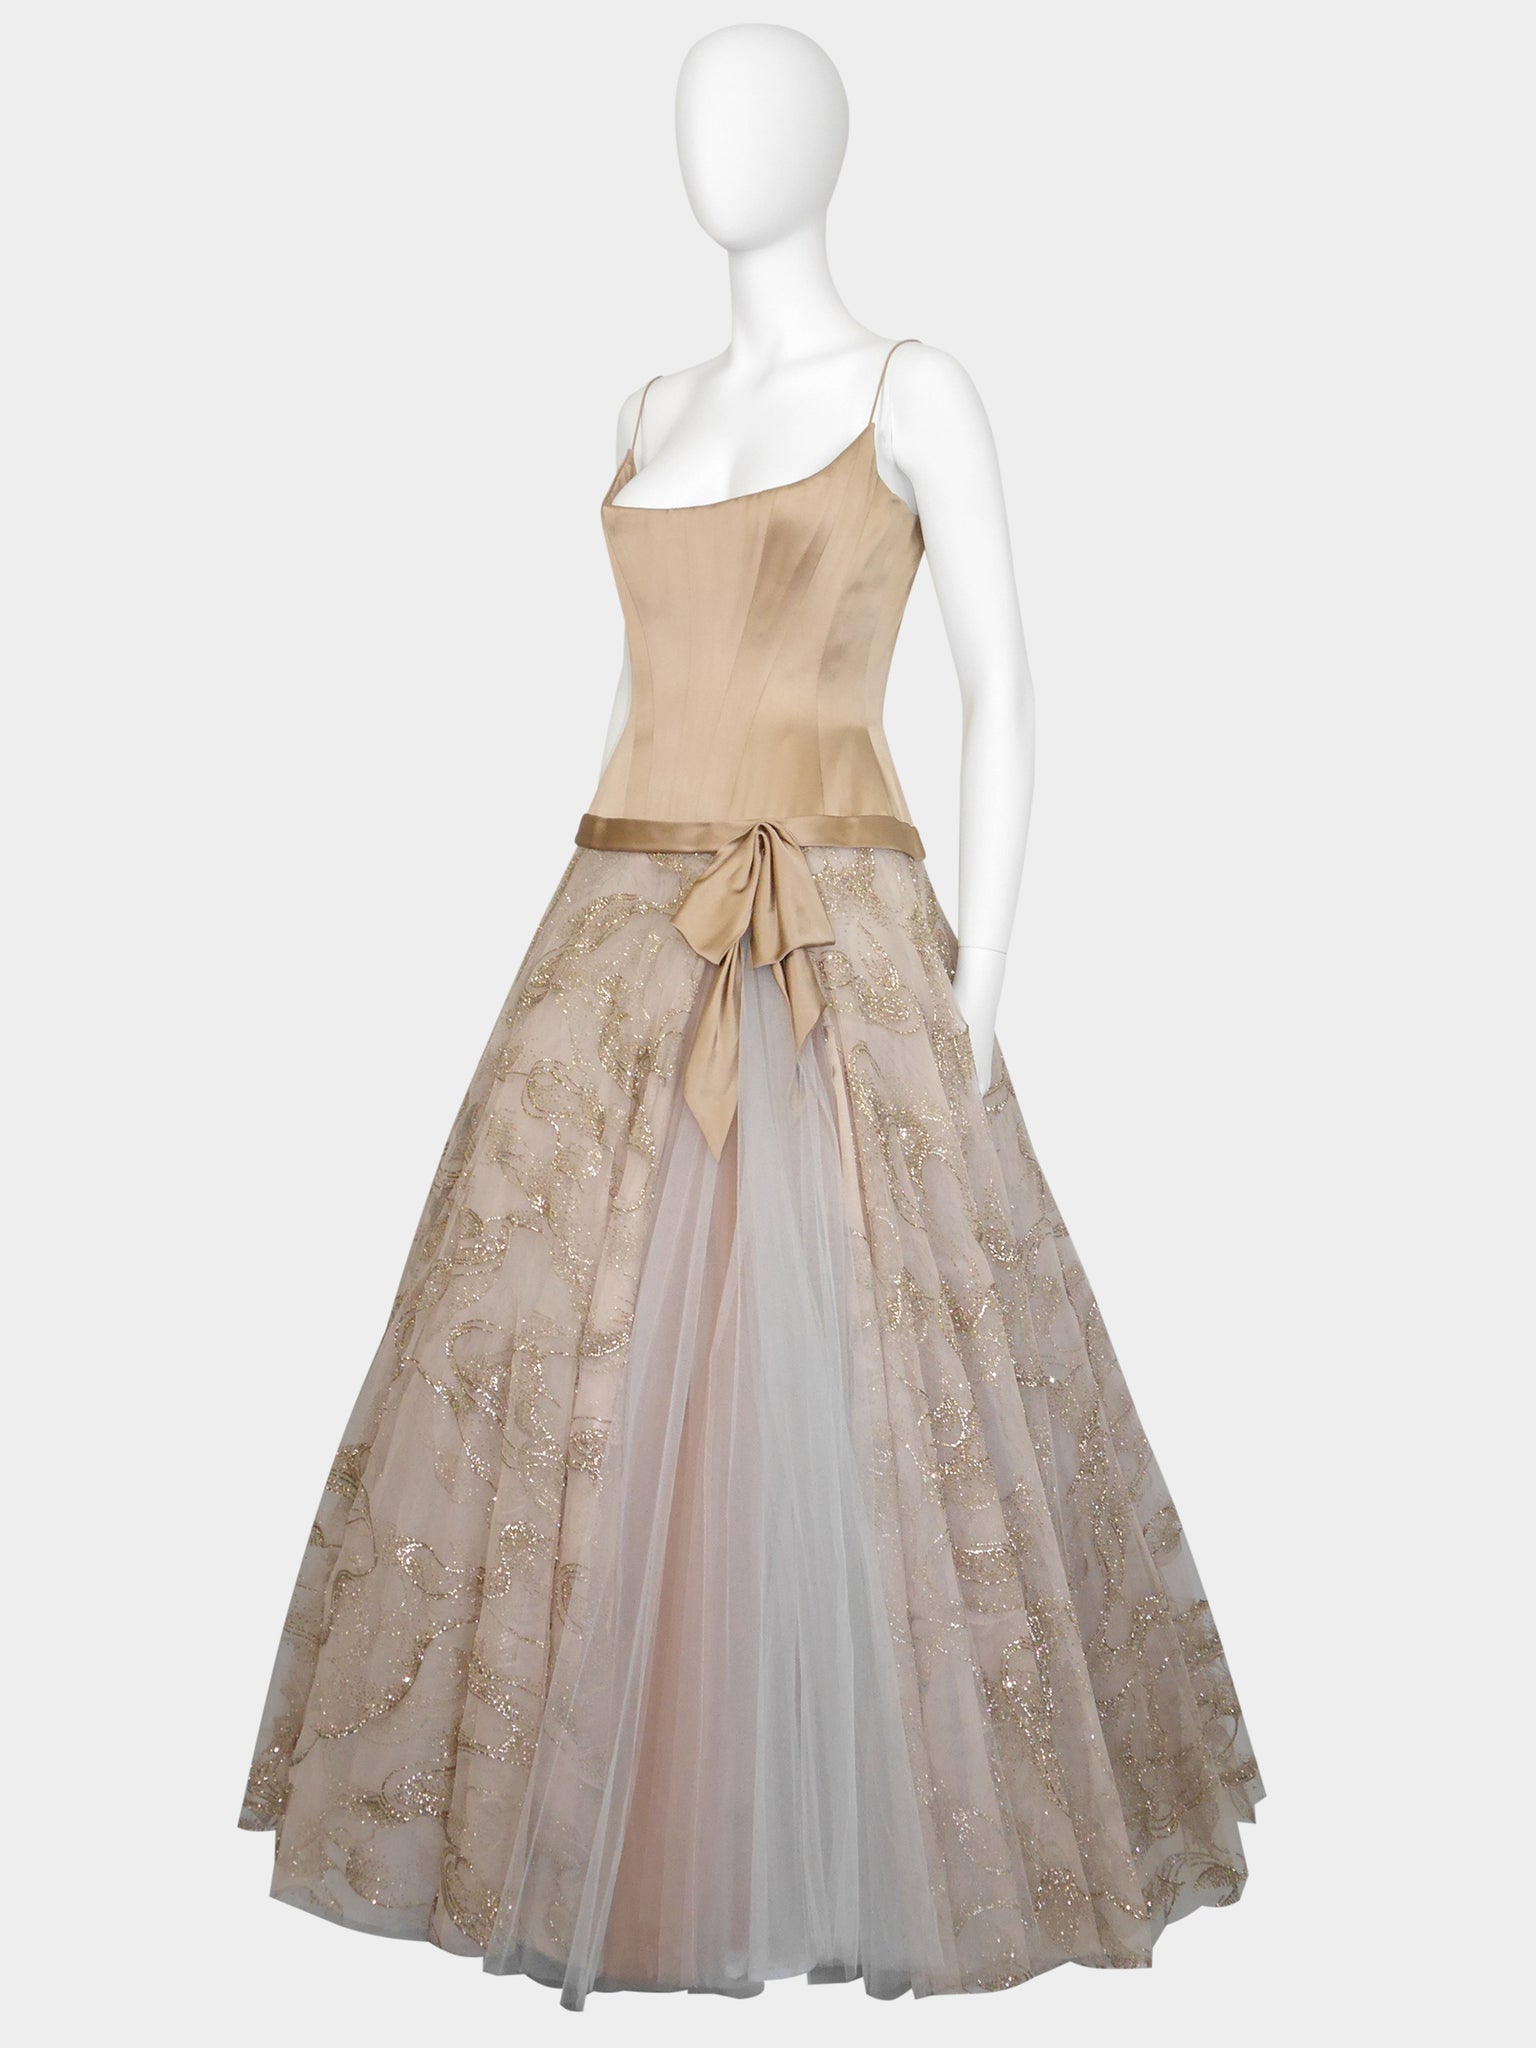 NINA RICCI 1990s Vintage Princess Ball Gown Evening Dress w/ Stole Size M